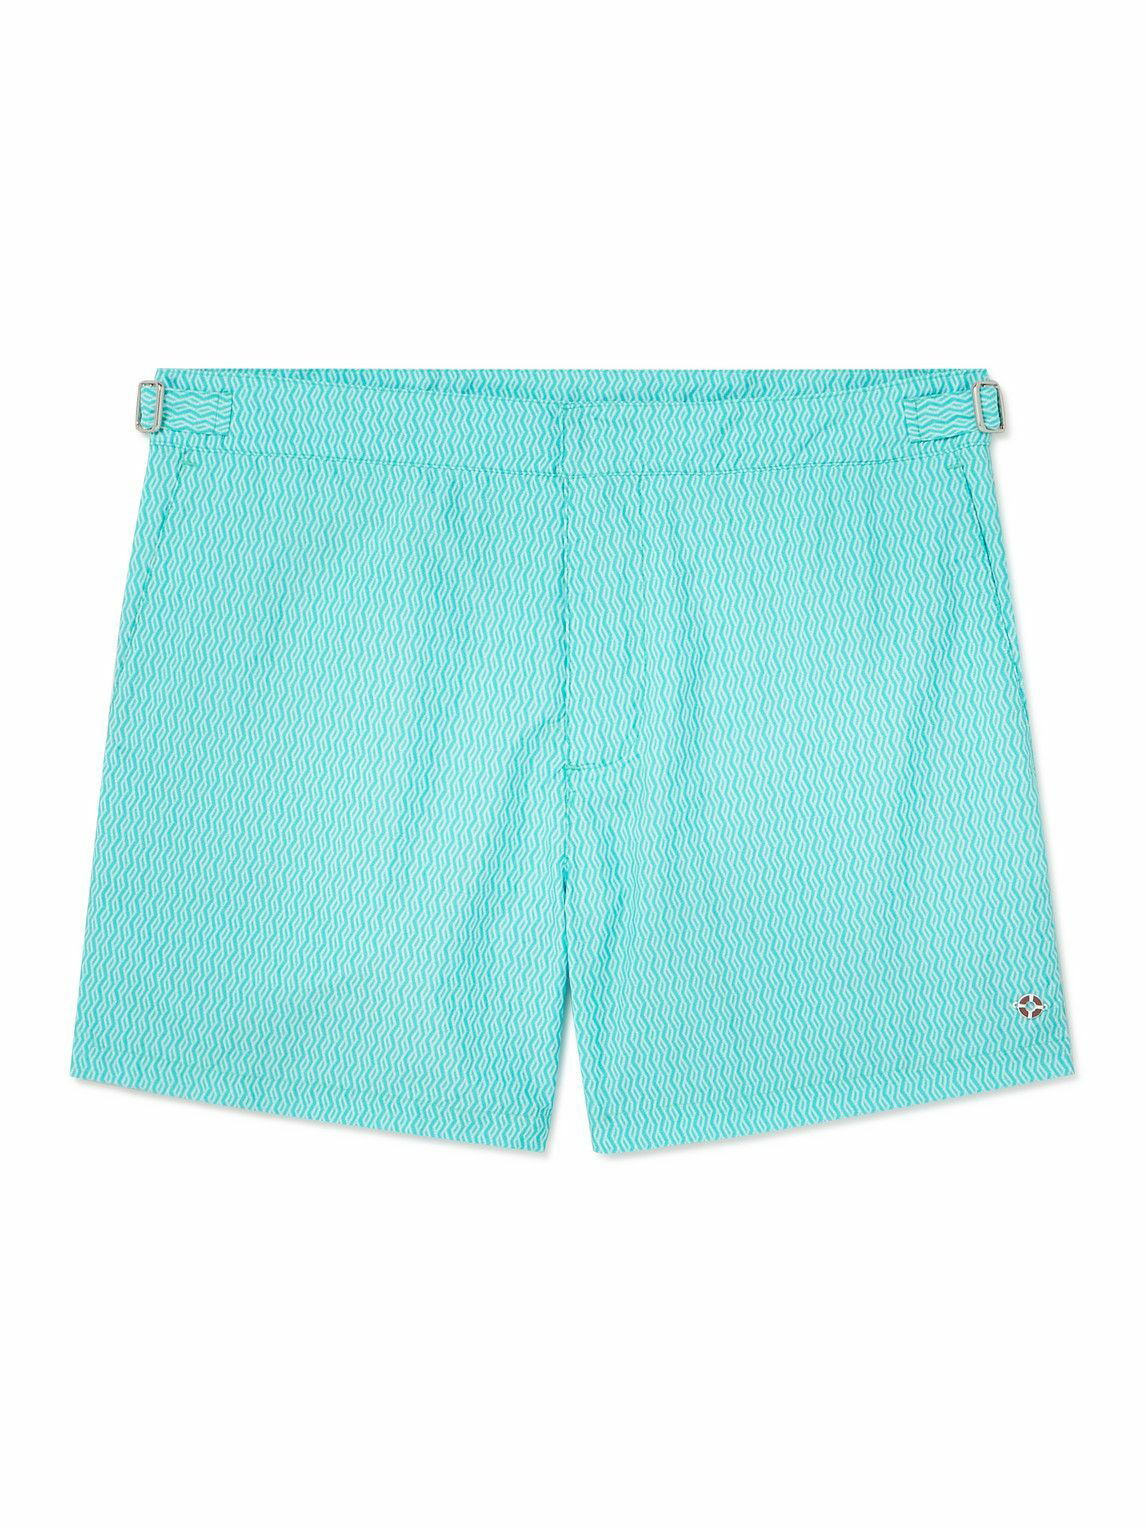 Bay Soft Tiles Printed Swim Shorts in Brown - Loro Piana